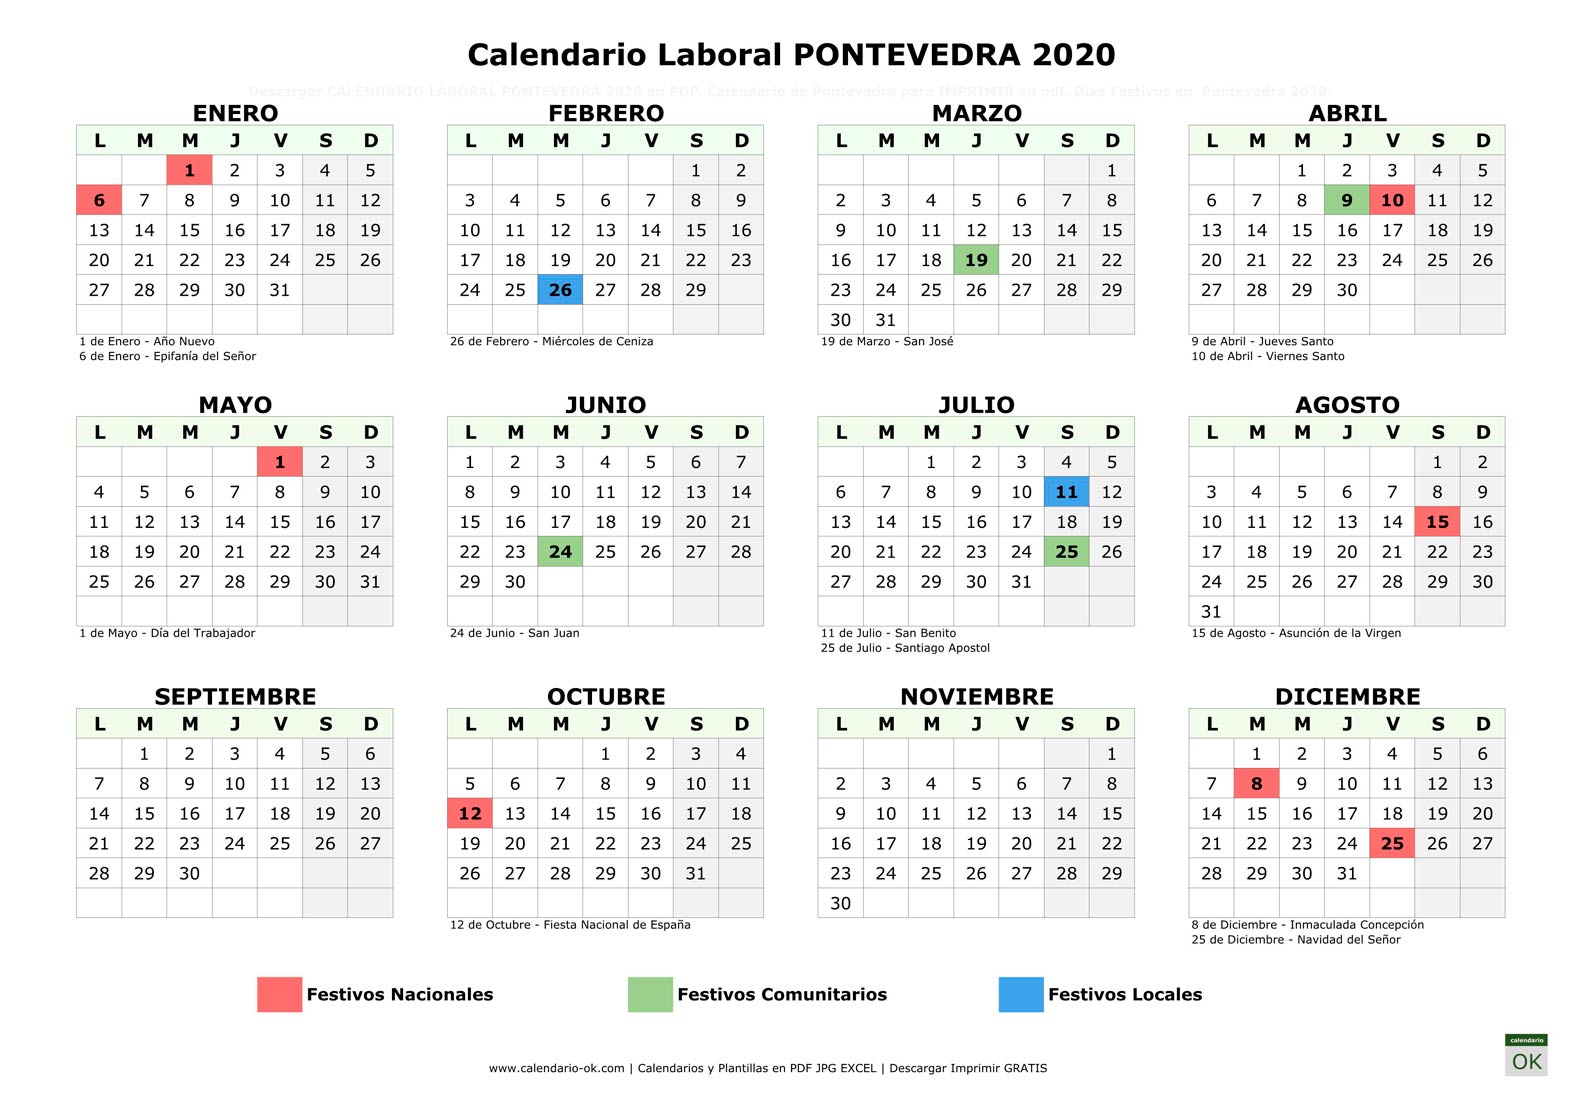 Calendario Laboral PONTEVEDRA 2020 horizontal